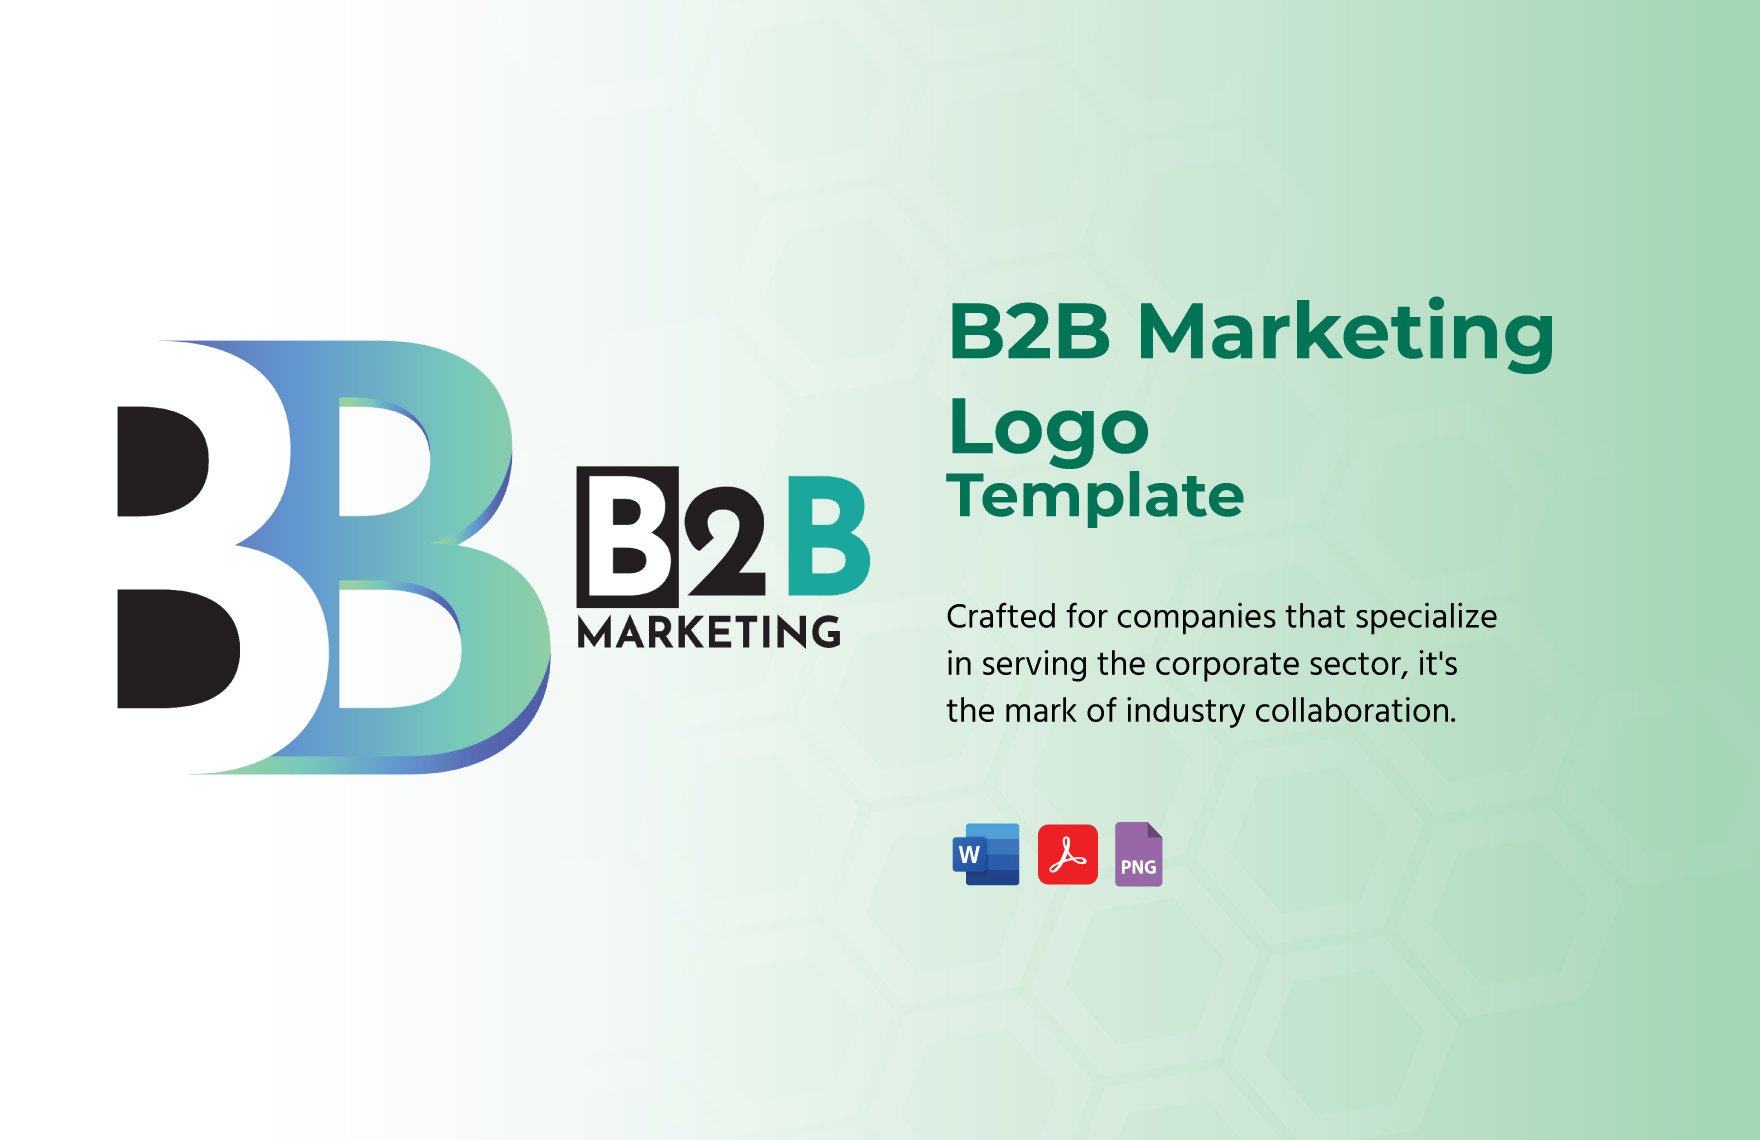 B2B Marketing Logo Template